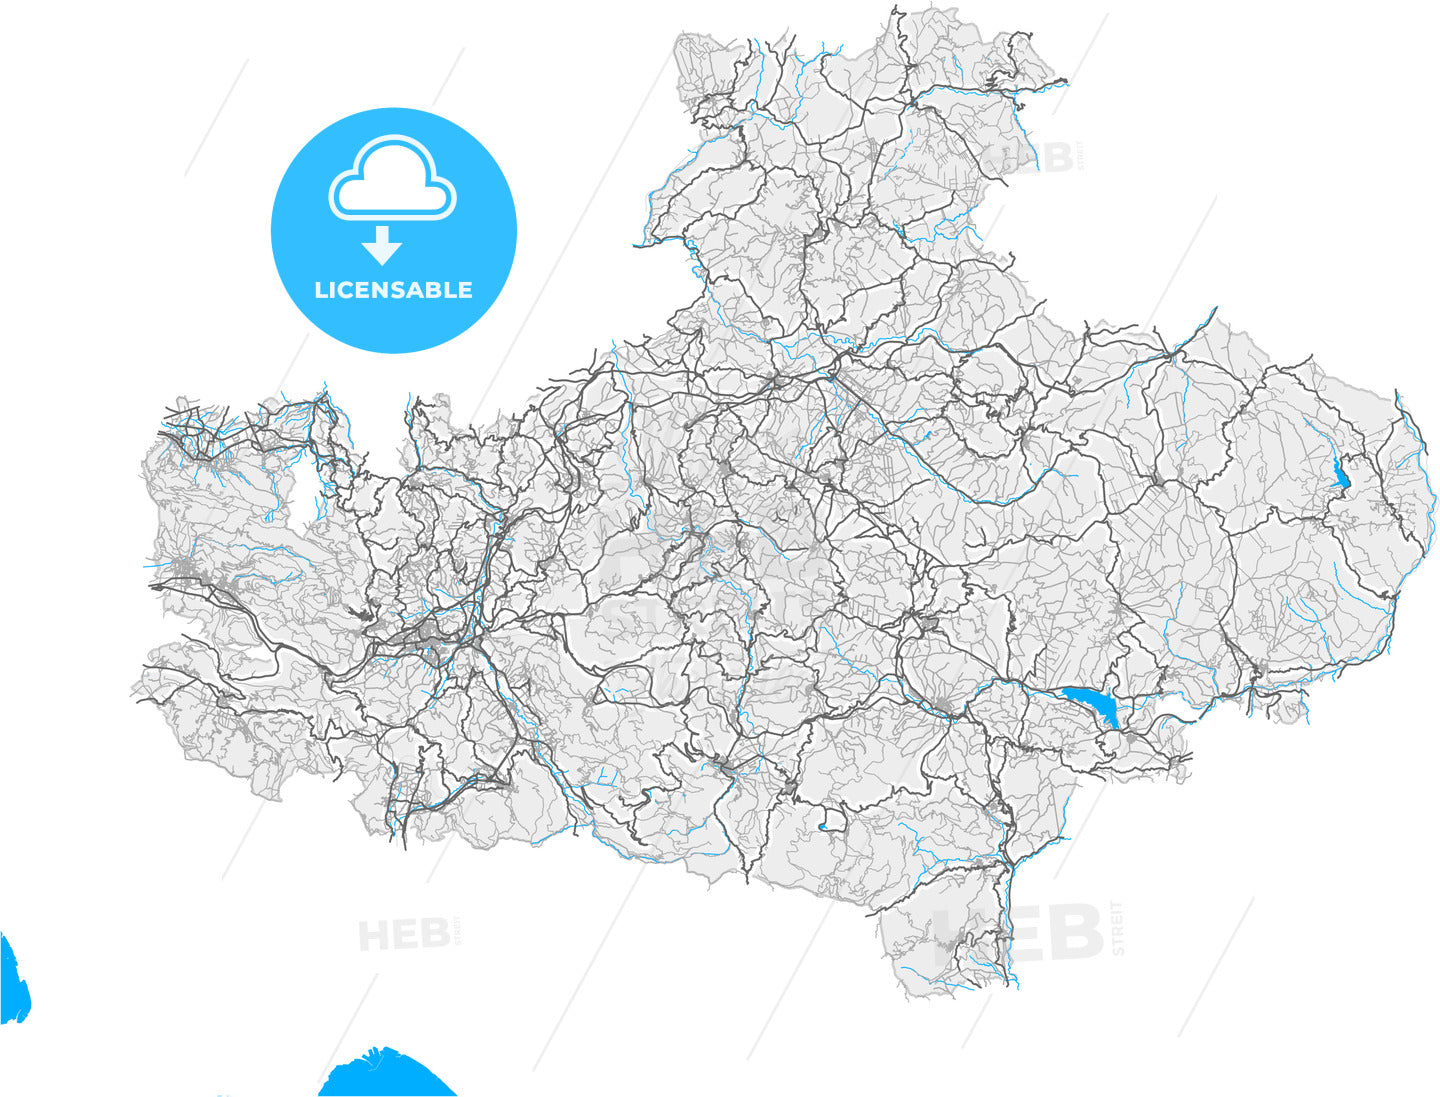 Avellino, Campania, Italy, high quality vector map